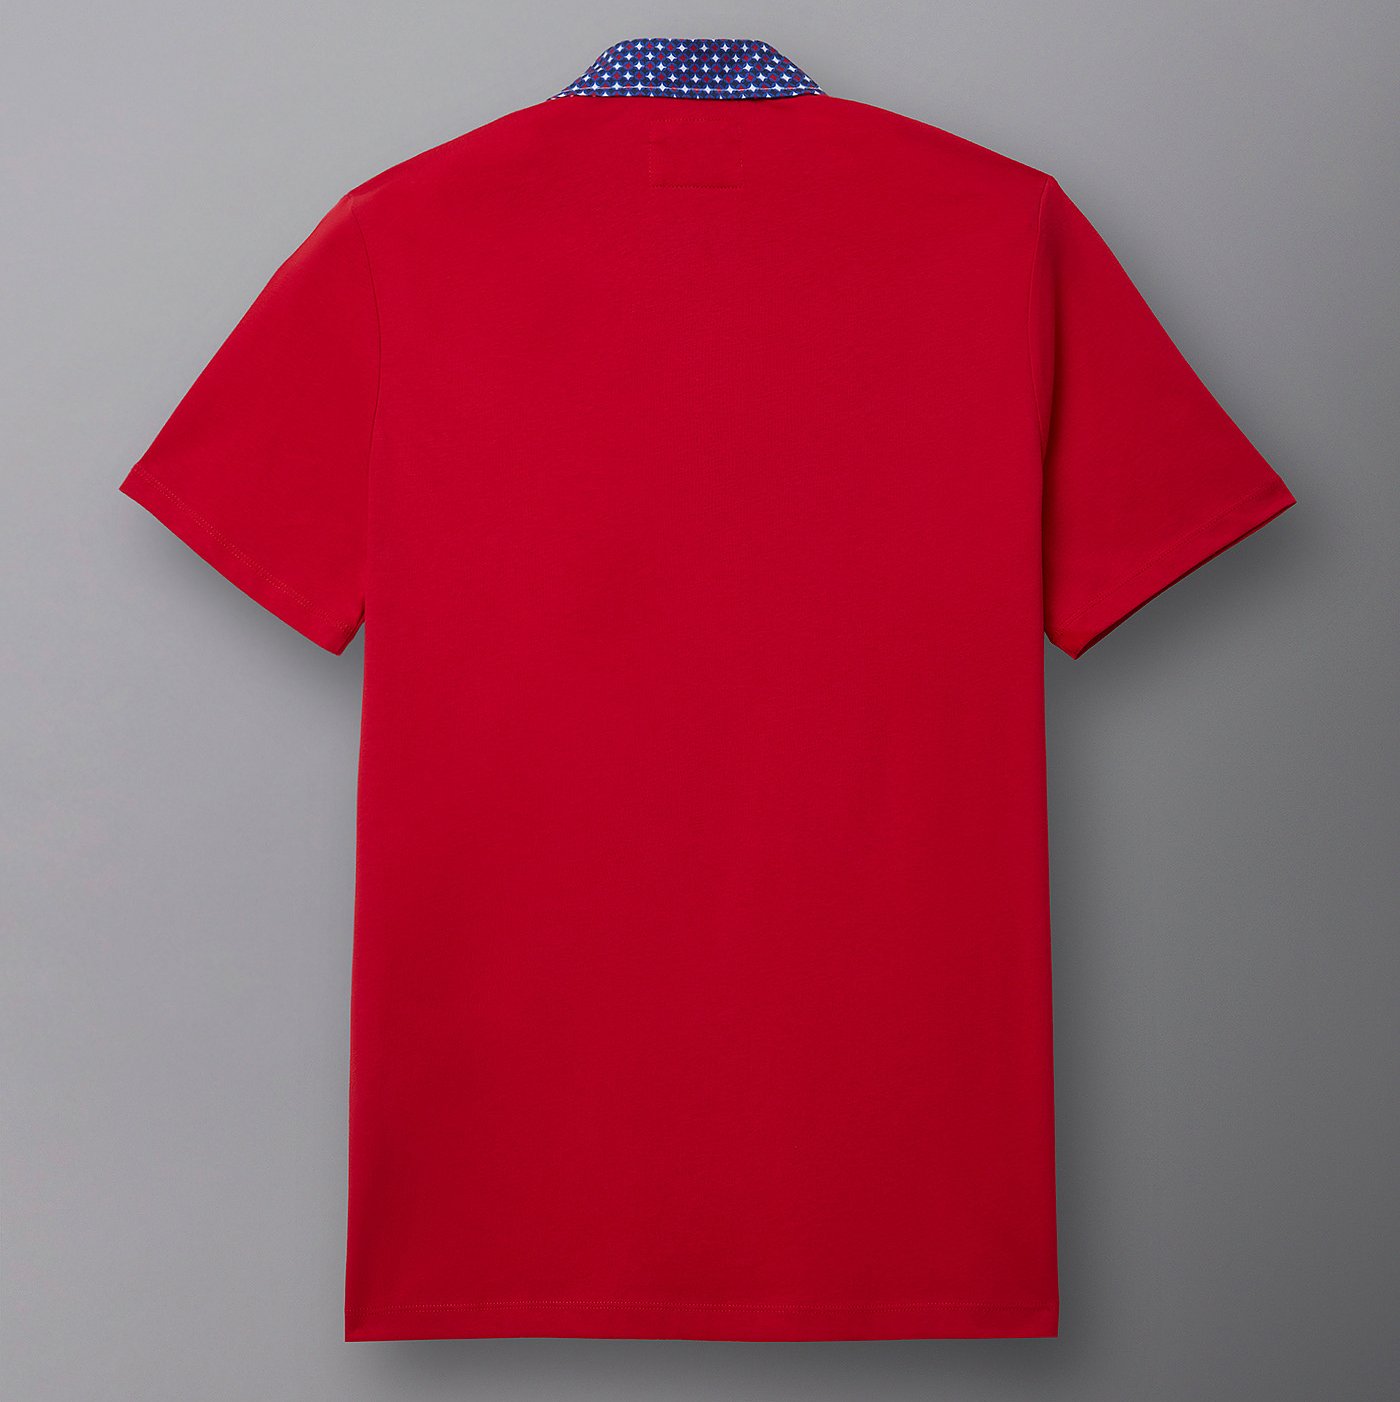 Polo majica jersey - crvena